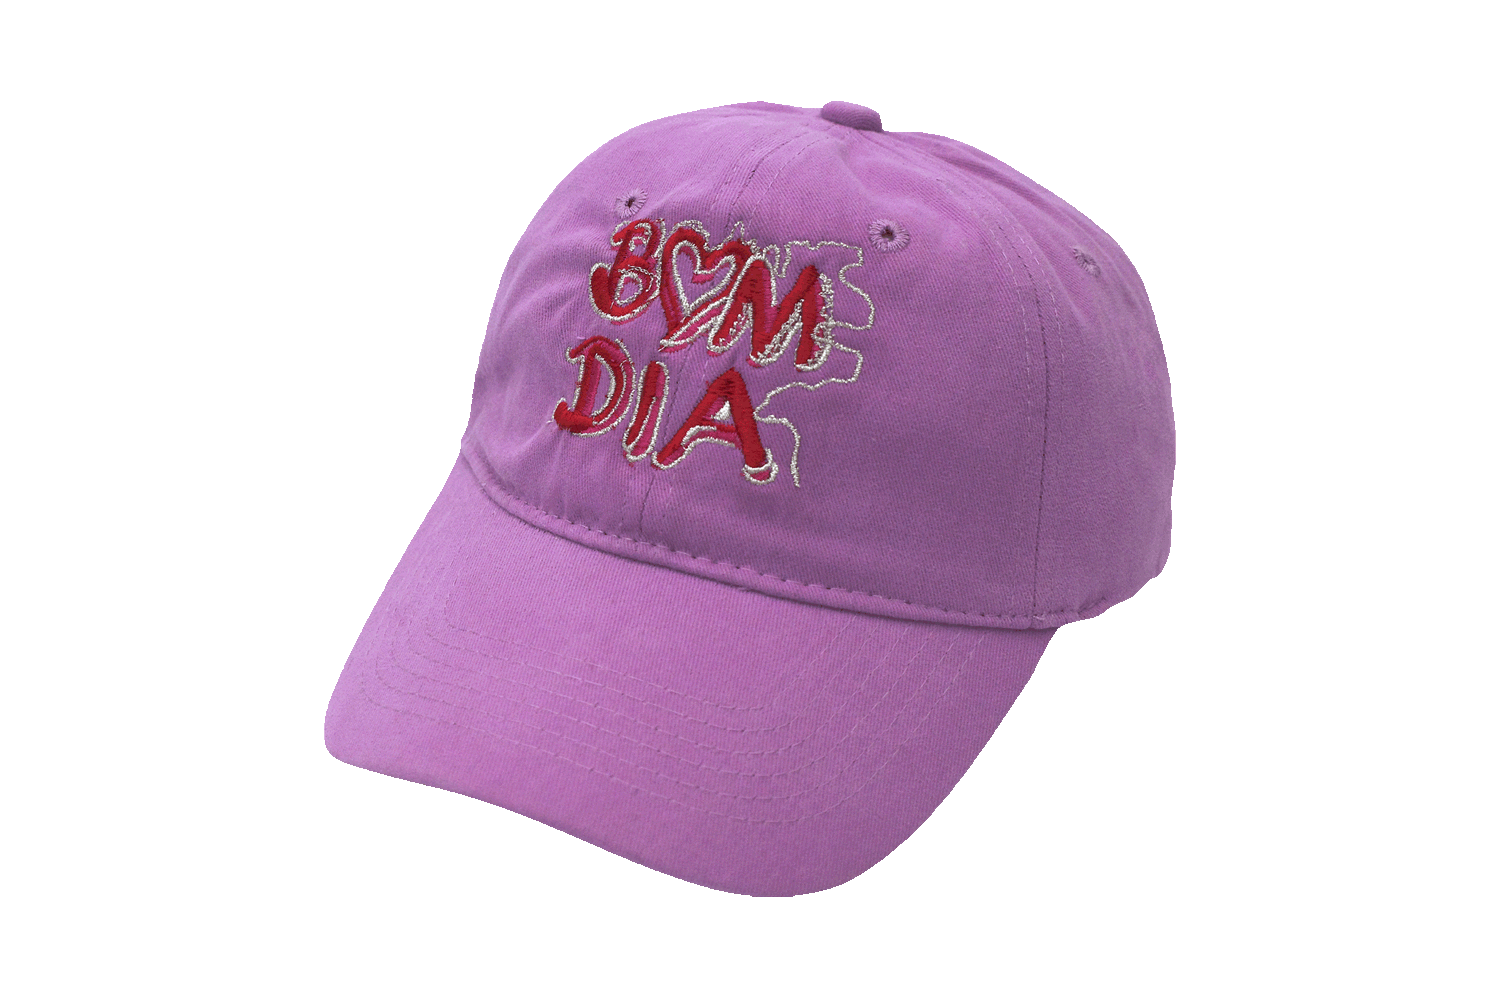 Product image of BOM DIA Baseball cap